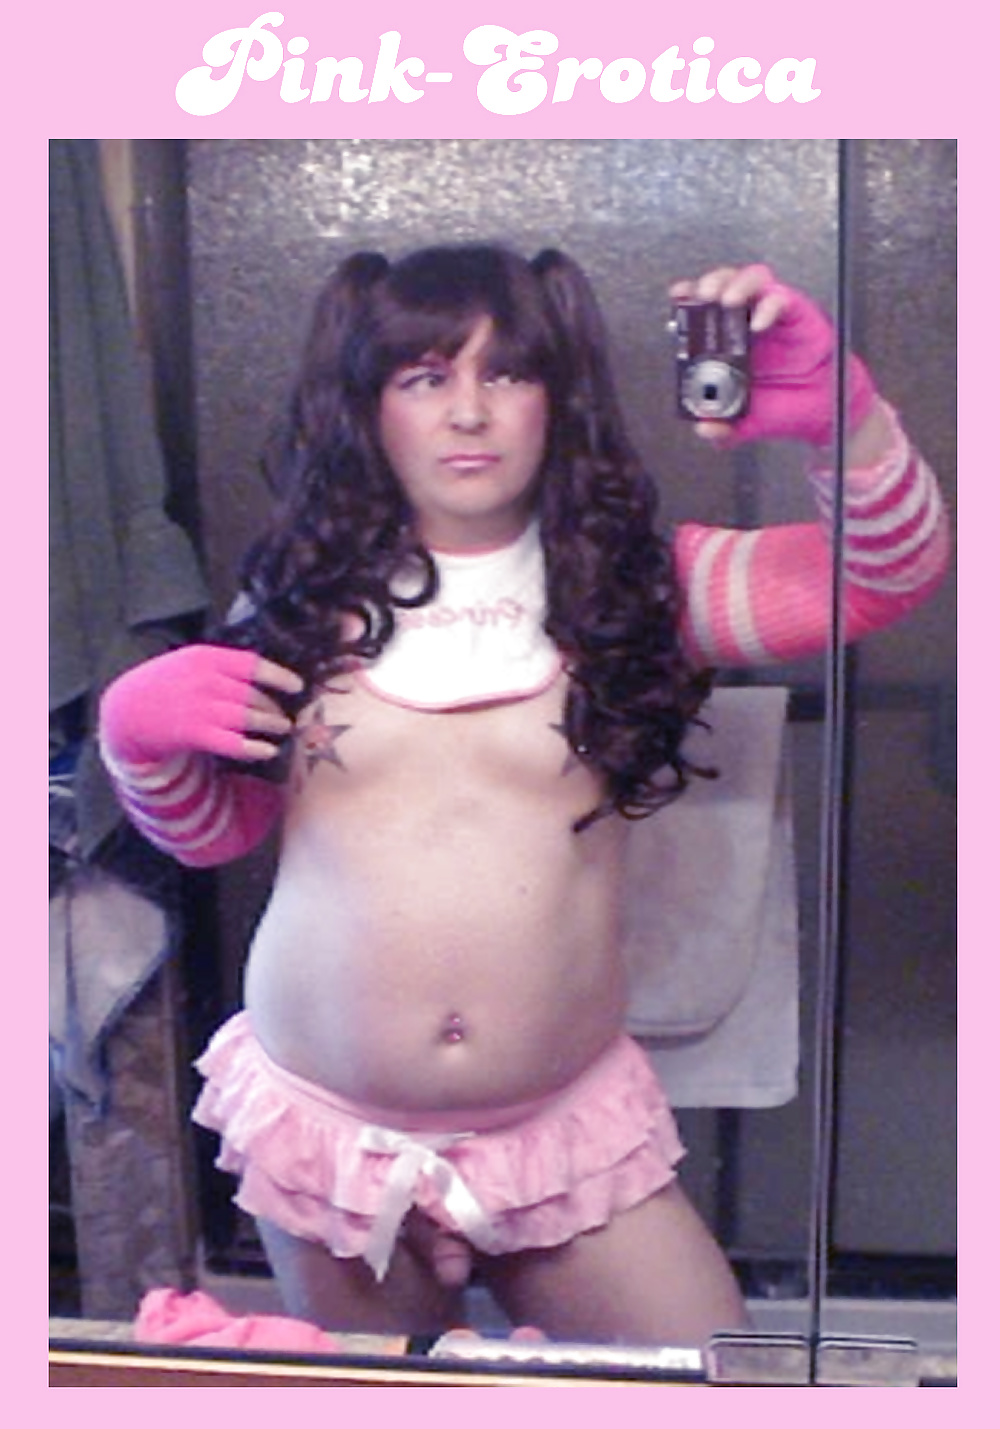 Pink-erotica sissyboy cross dresser baby gurl in pink
 #32150551